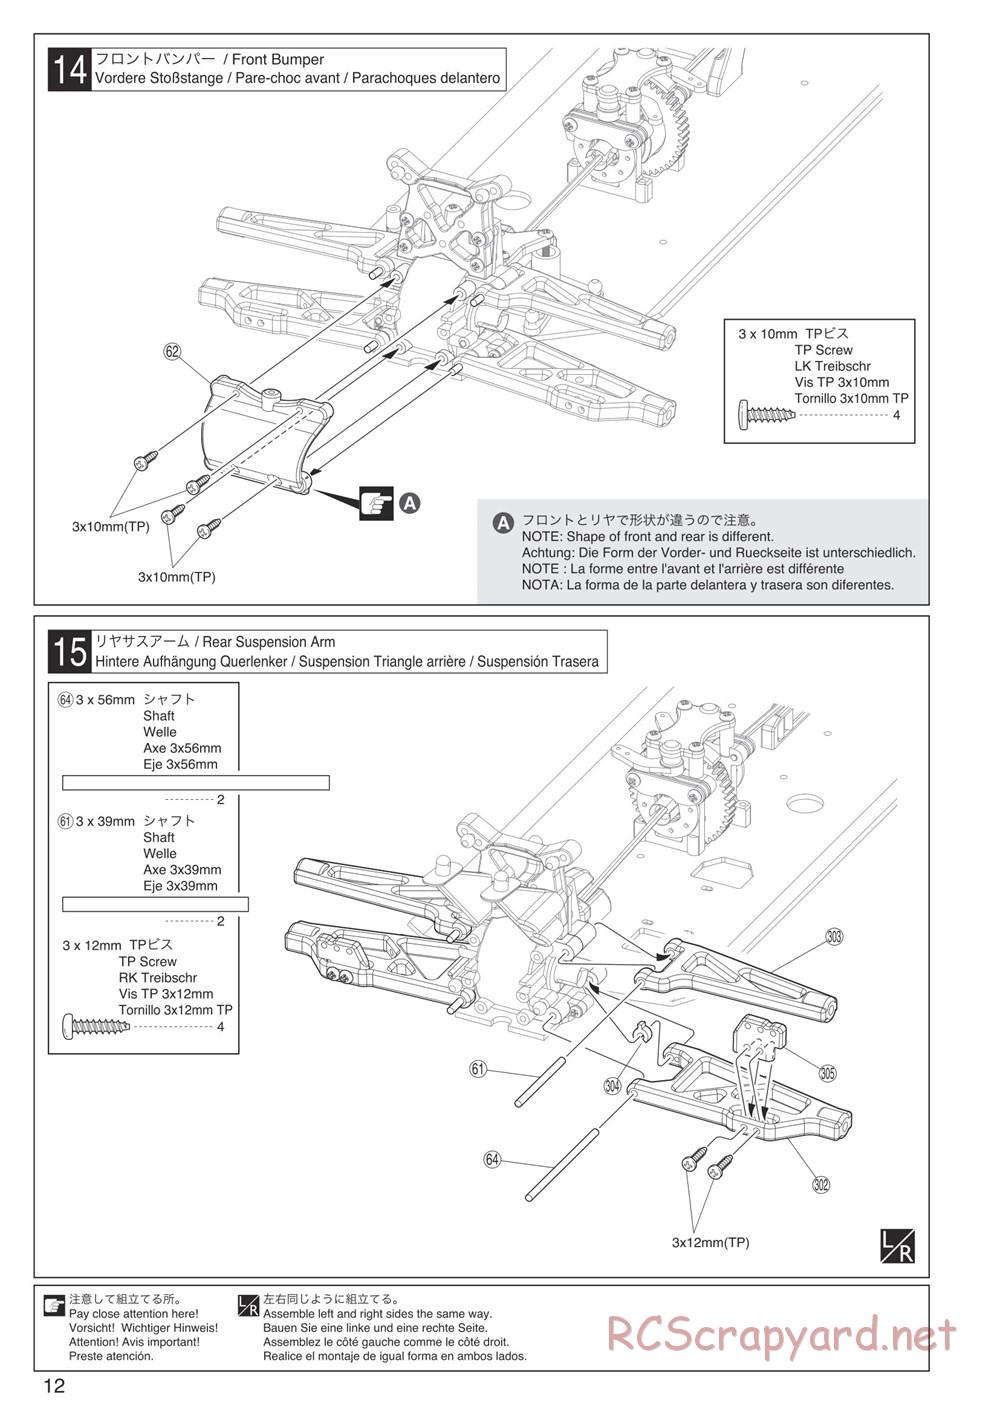 Kyosho - DBX 2.0 - Manual - Page 12